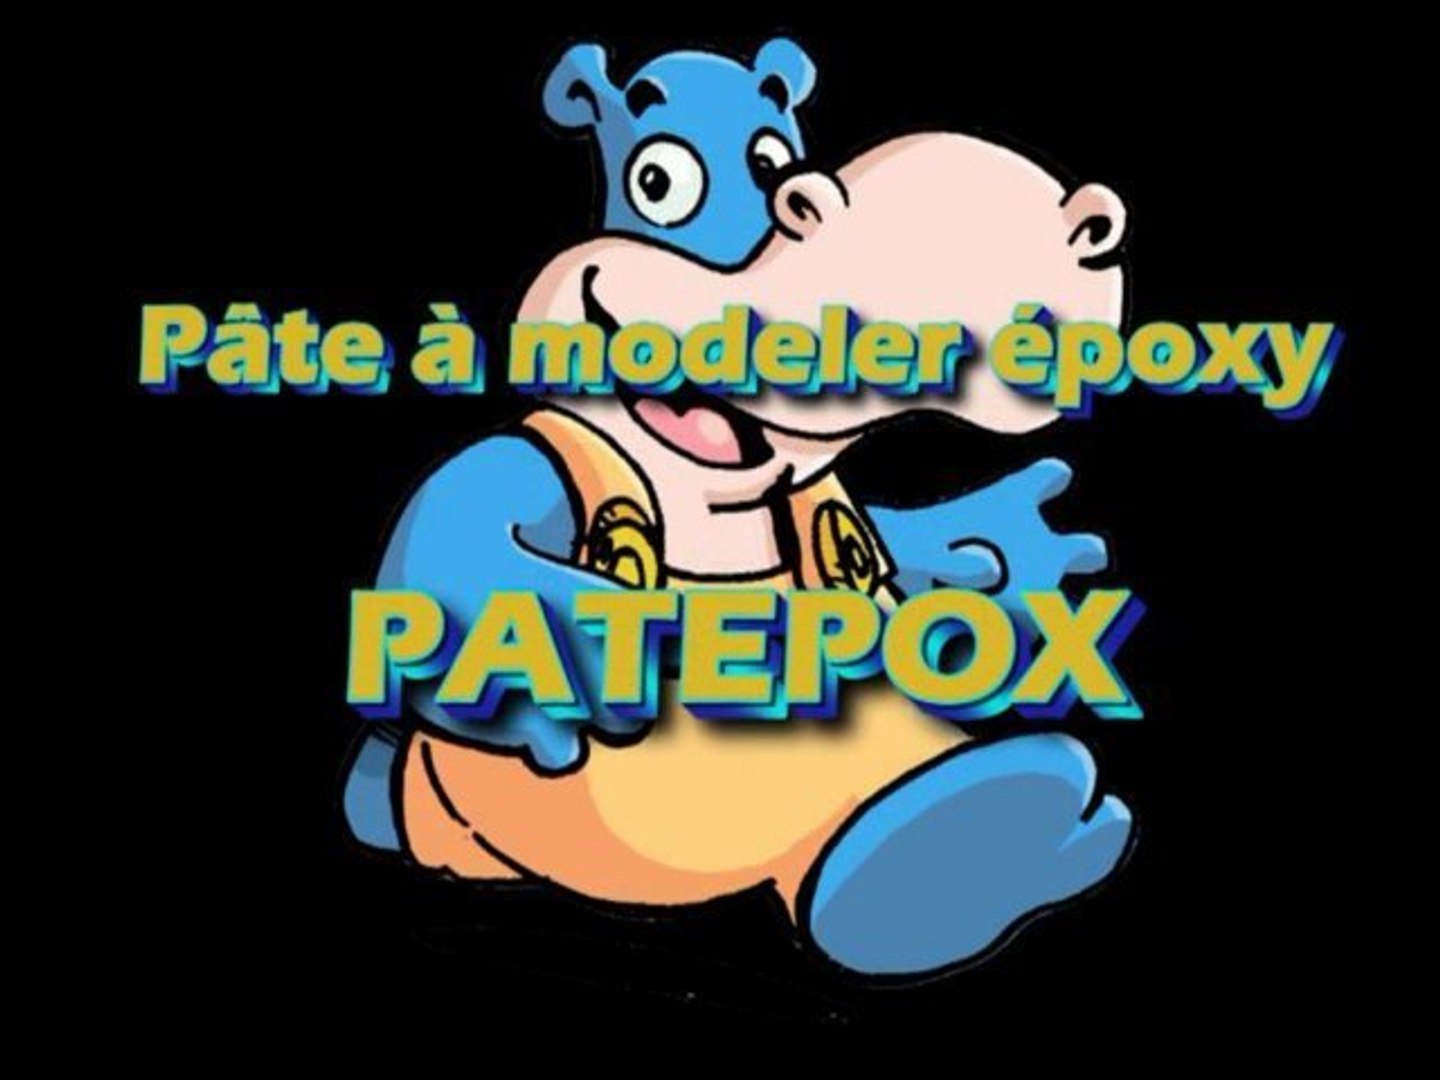 PATEPOX, PATE A MODELER EPOXY